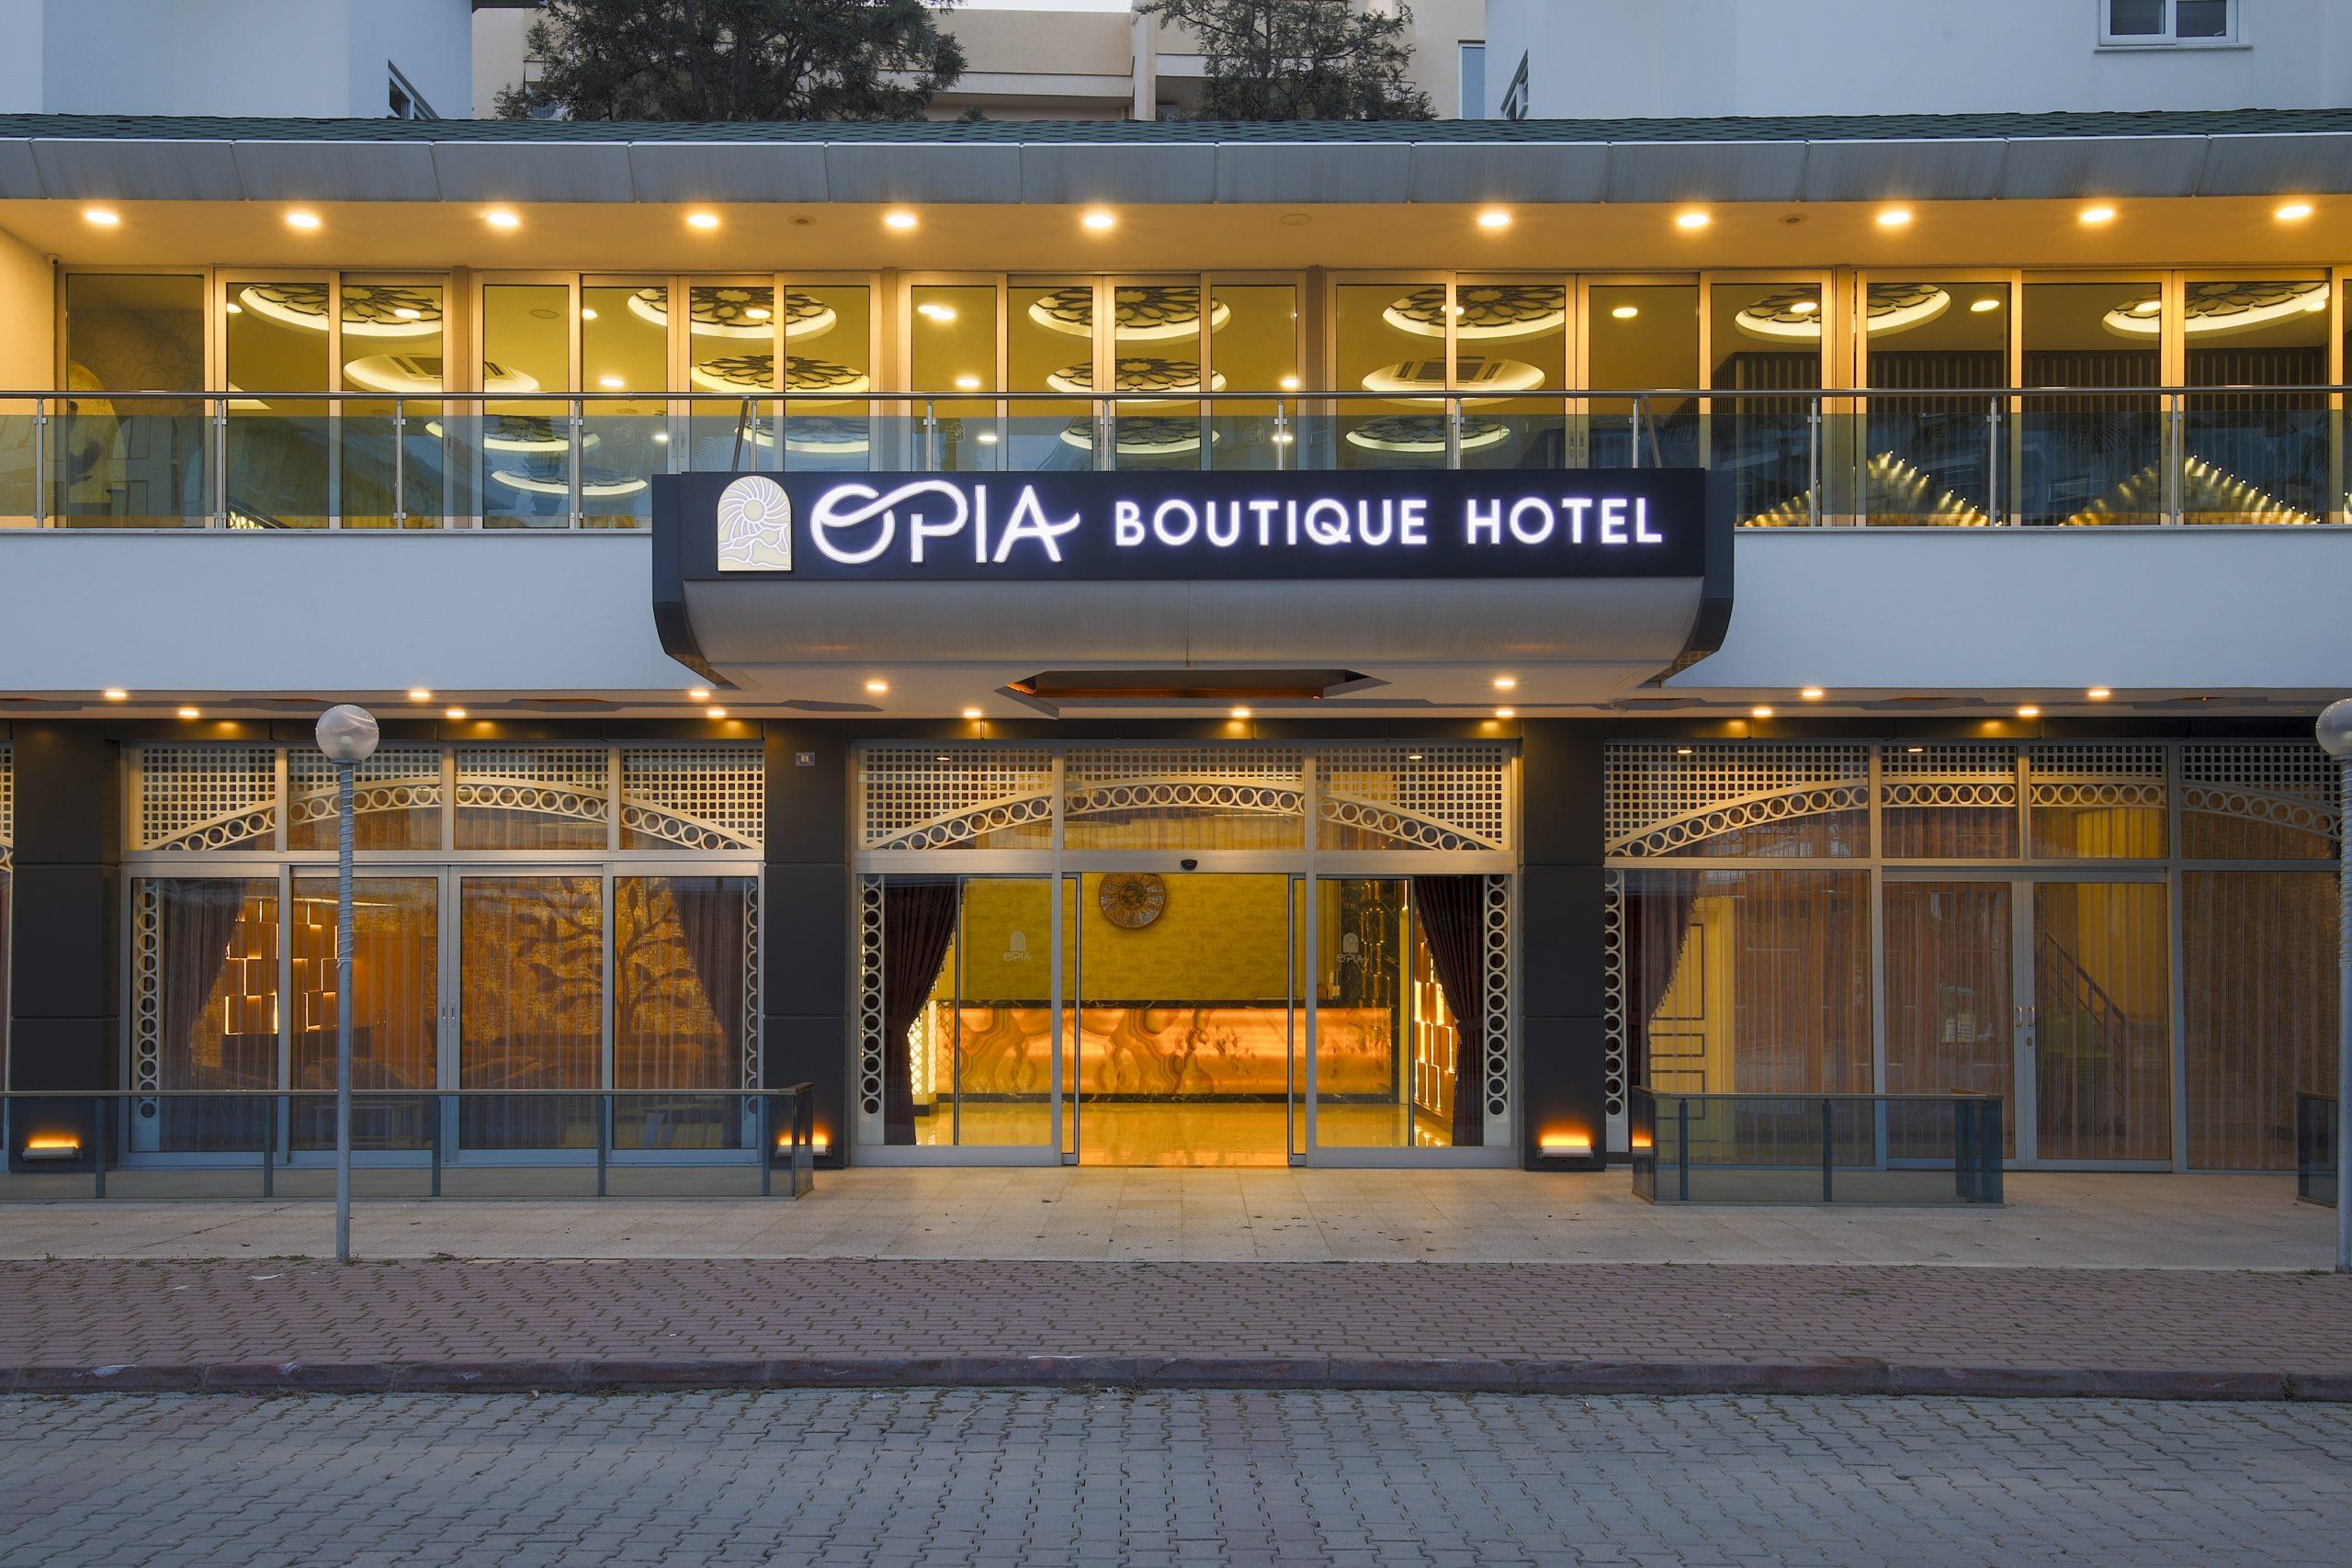 Opia Boutique Hotel 4*. Opia Boutique Hotel. Opia Hotel Турция. Opia Butik Hotel. Konakli nergis boutique